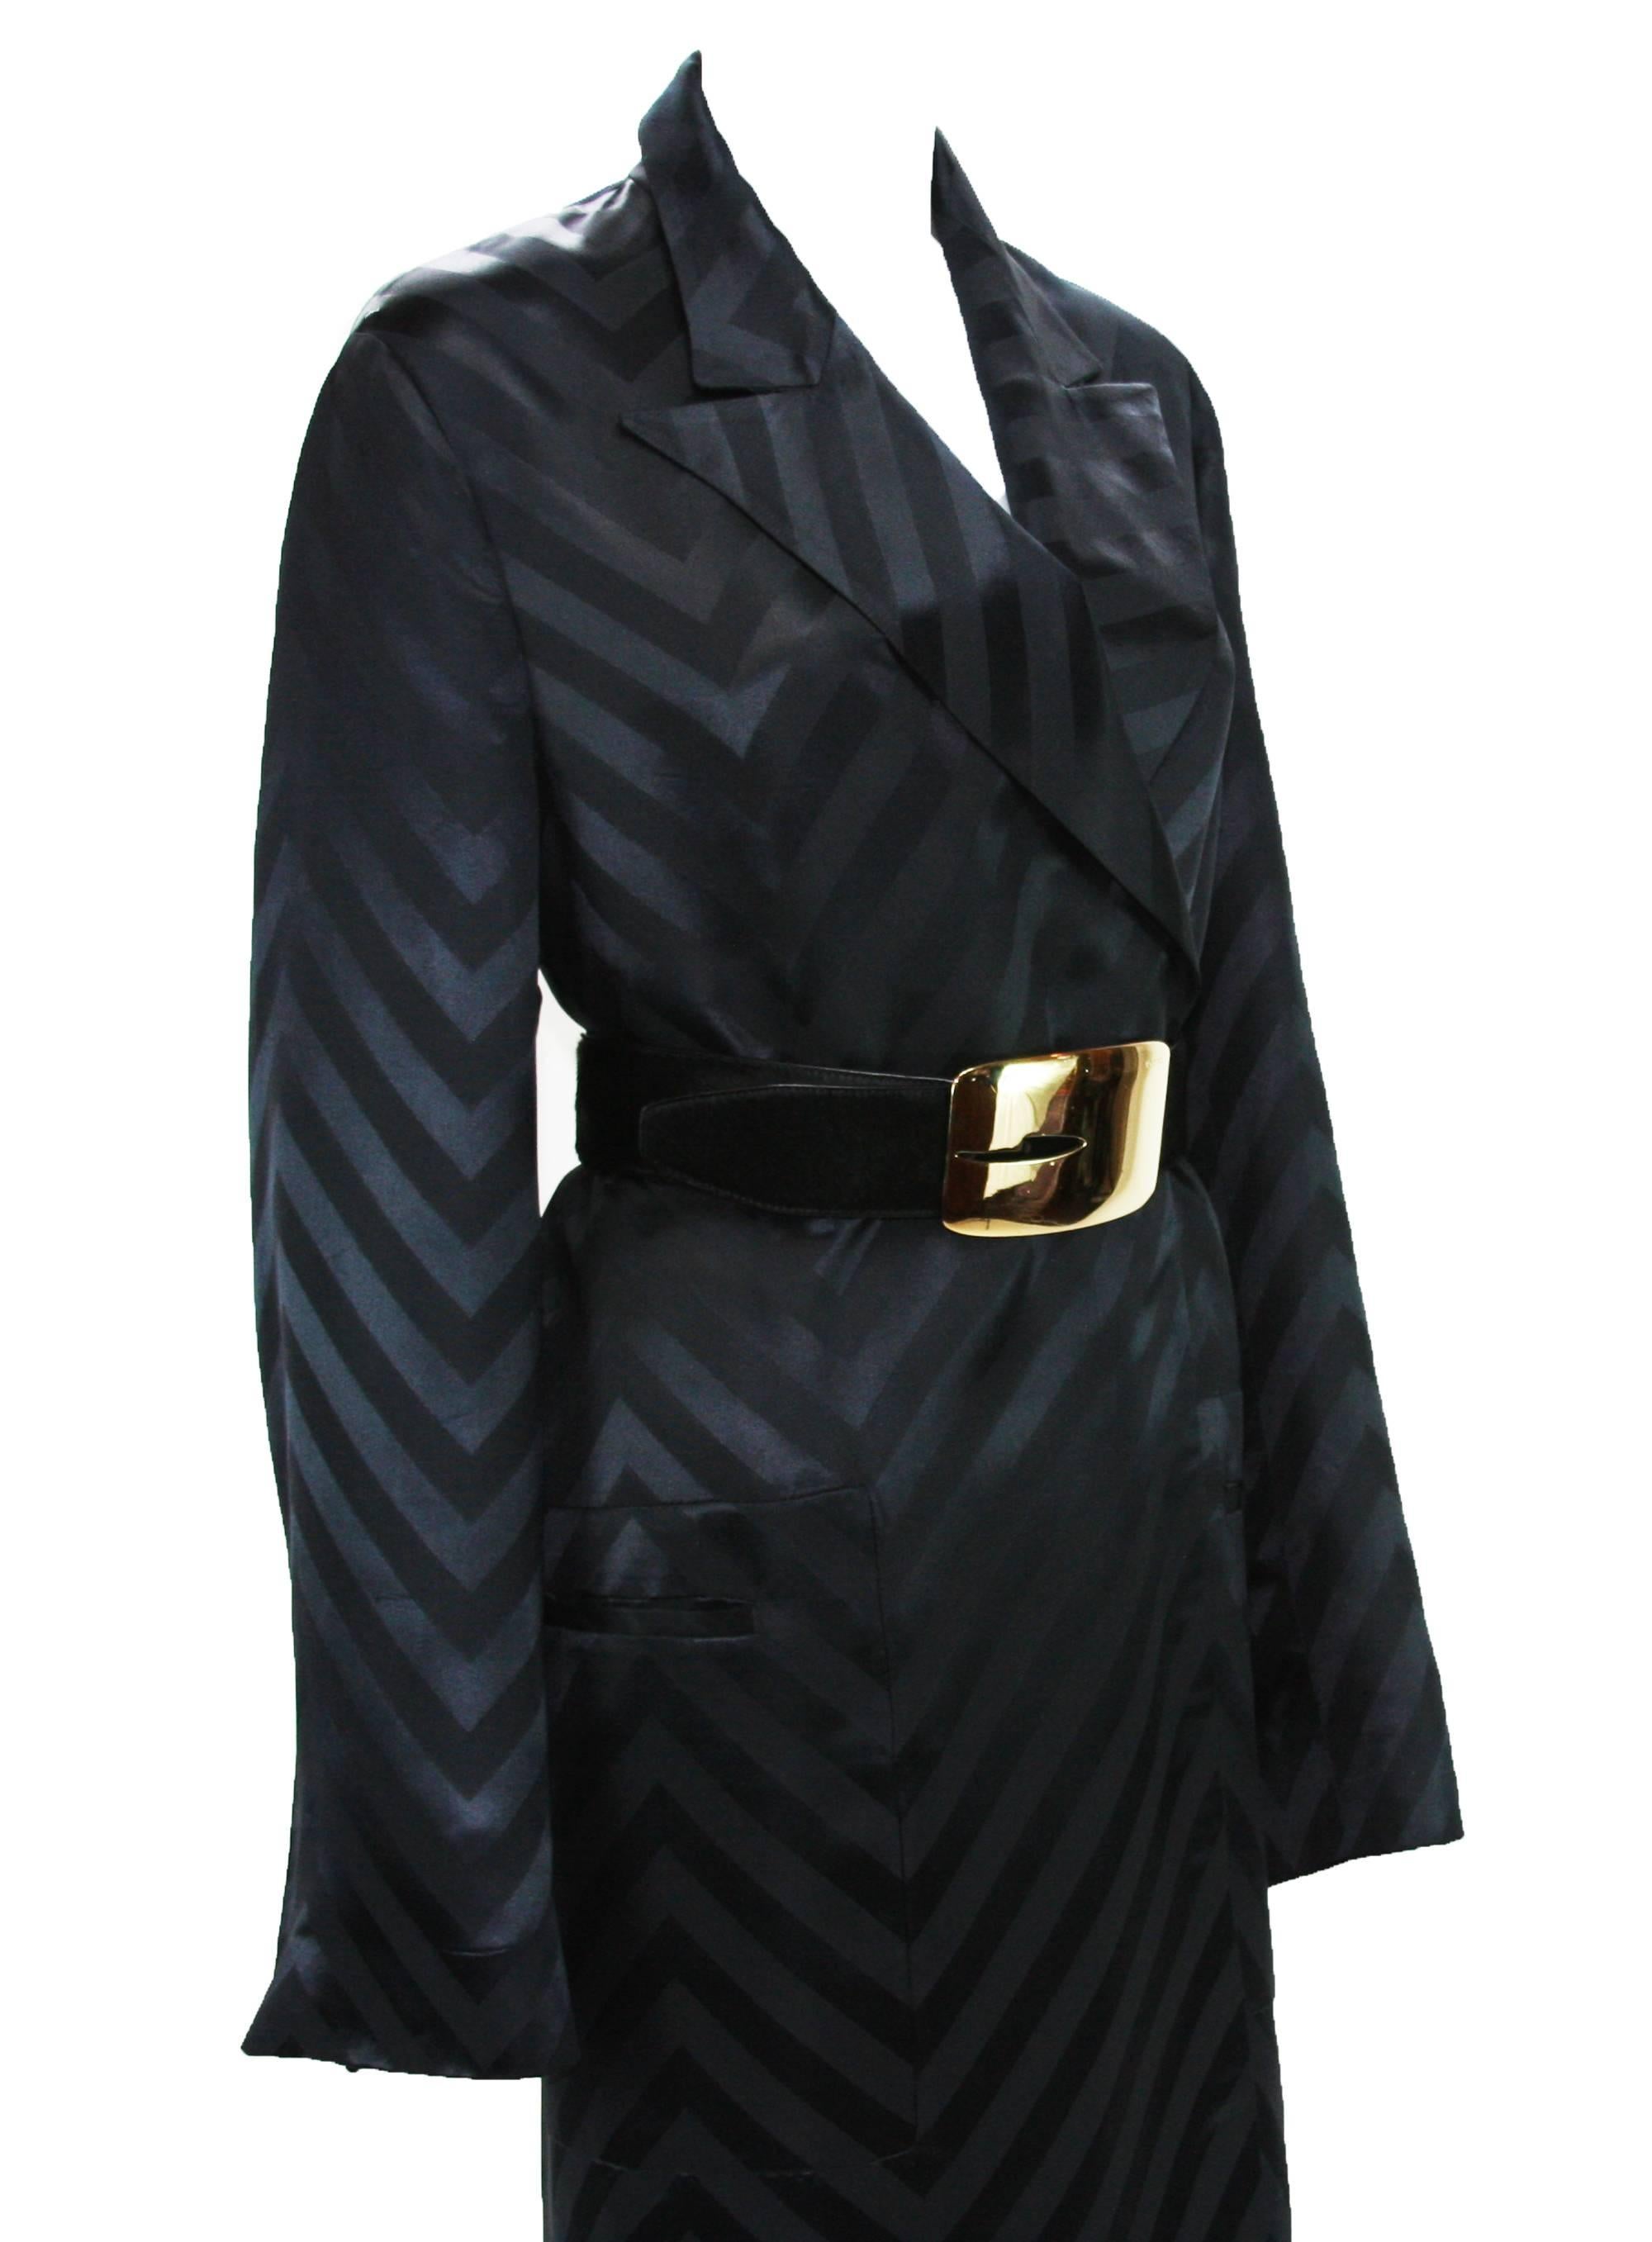 Tom Ford for Gucci F/W 2002 Black Silk Kimono Coat with Belt  2